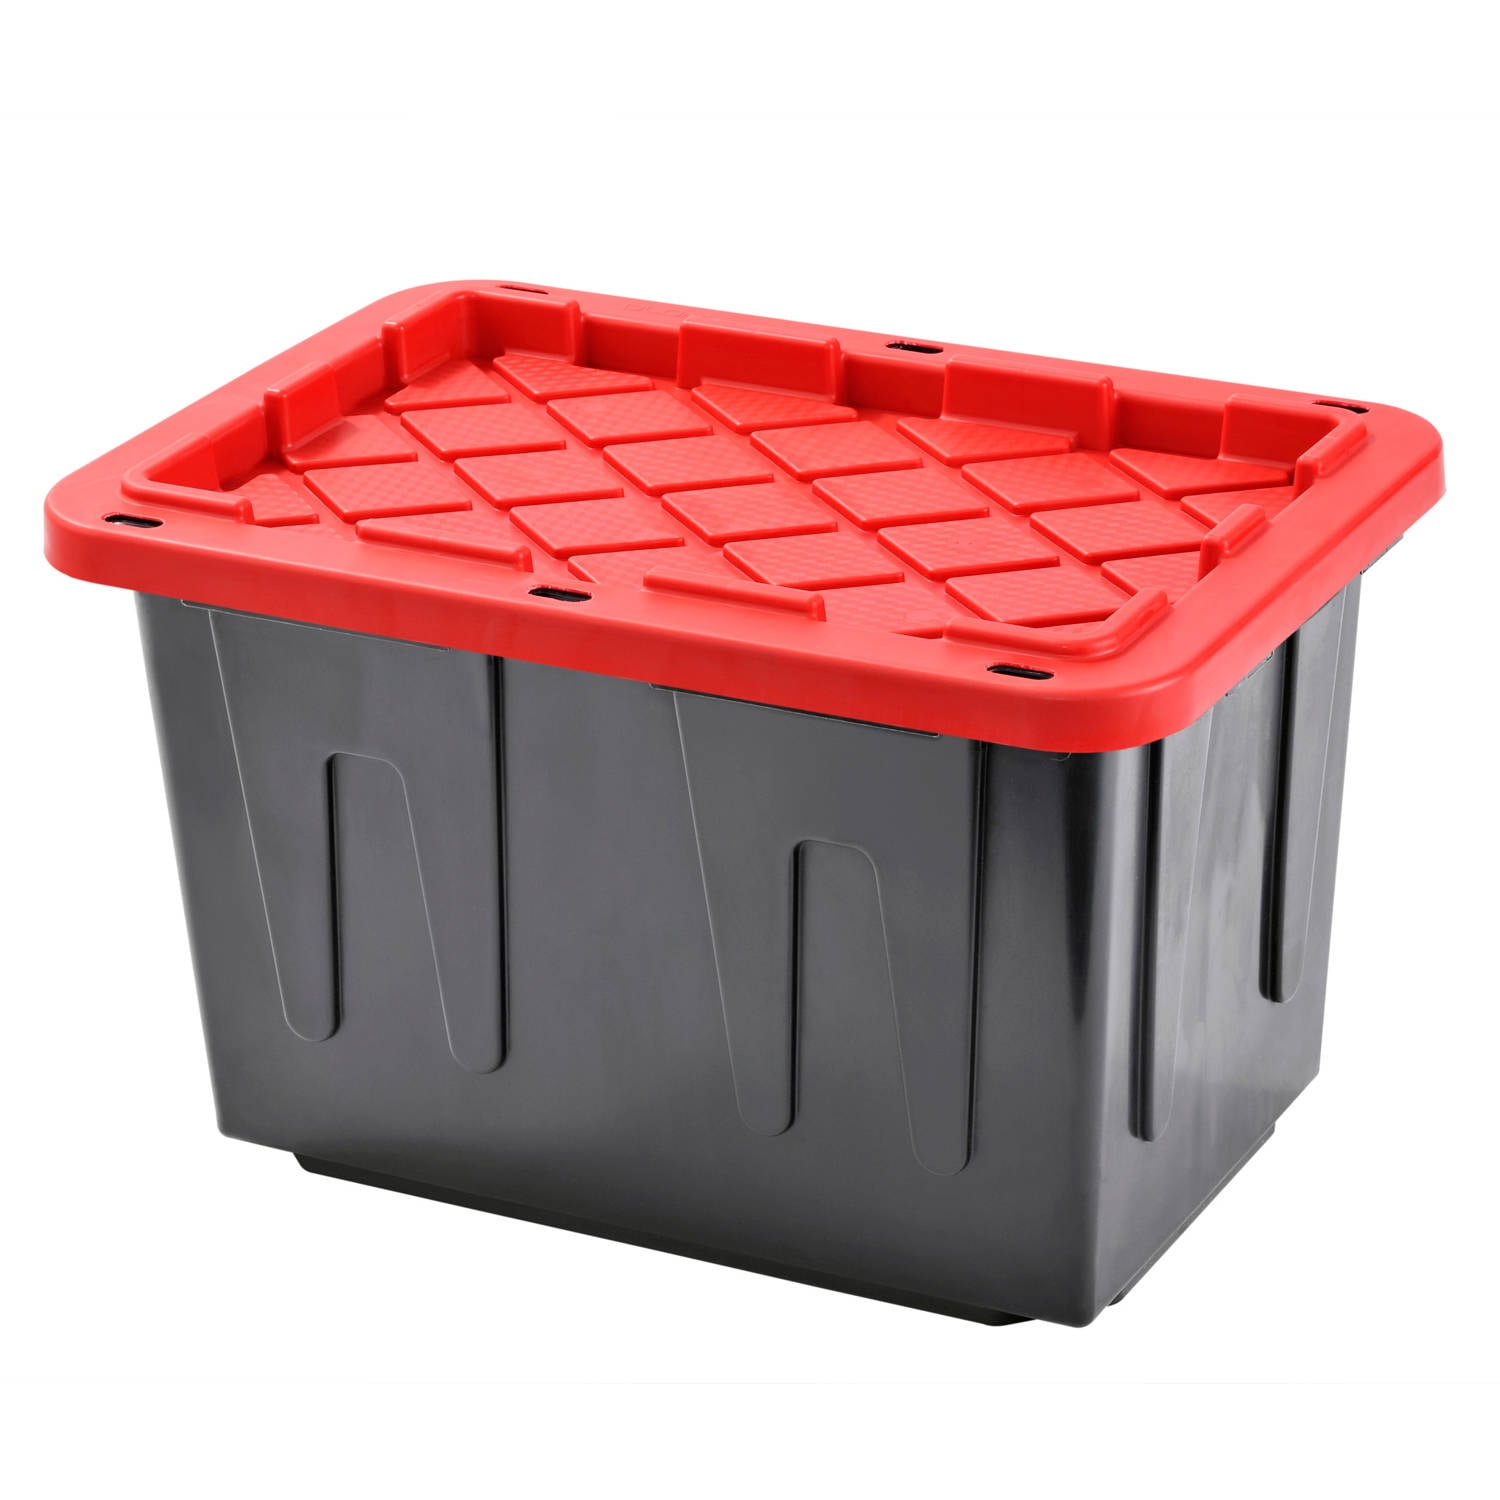 17 Gallon Snap Lid Plastic Storage Tote, Black Base/Red Lid, Set